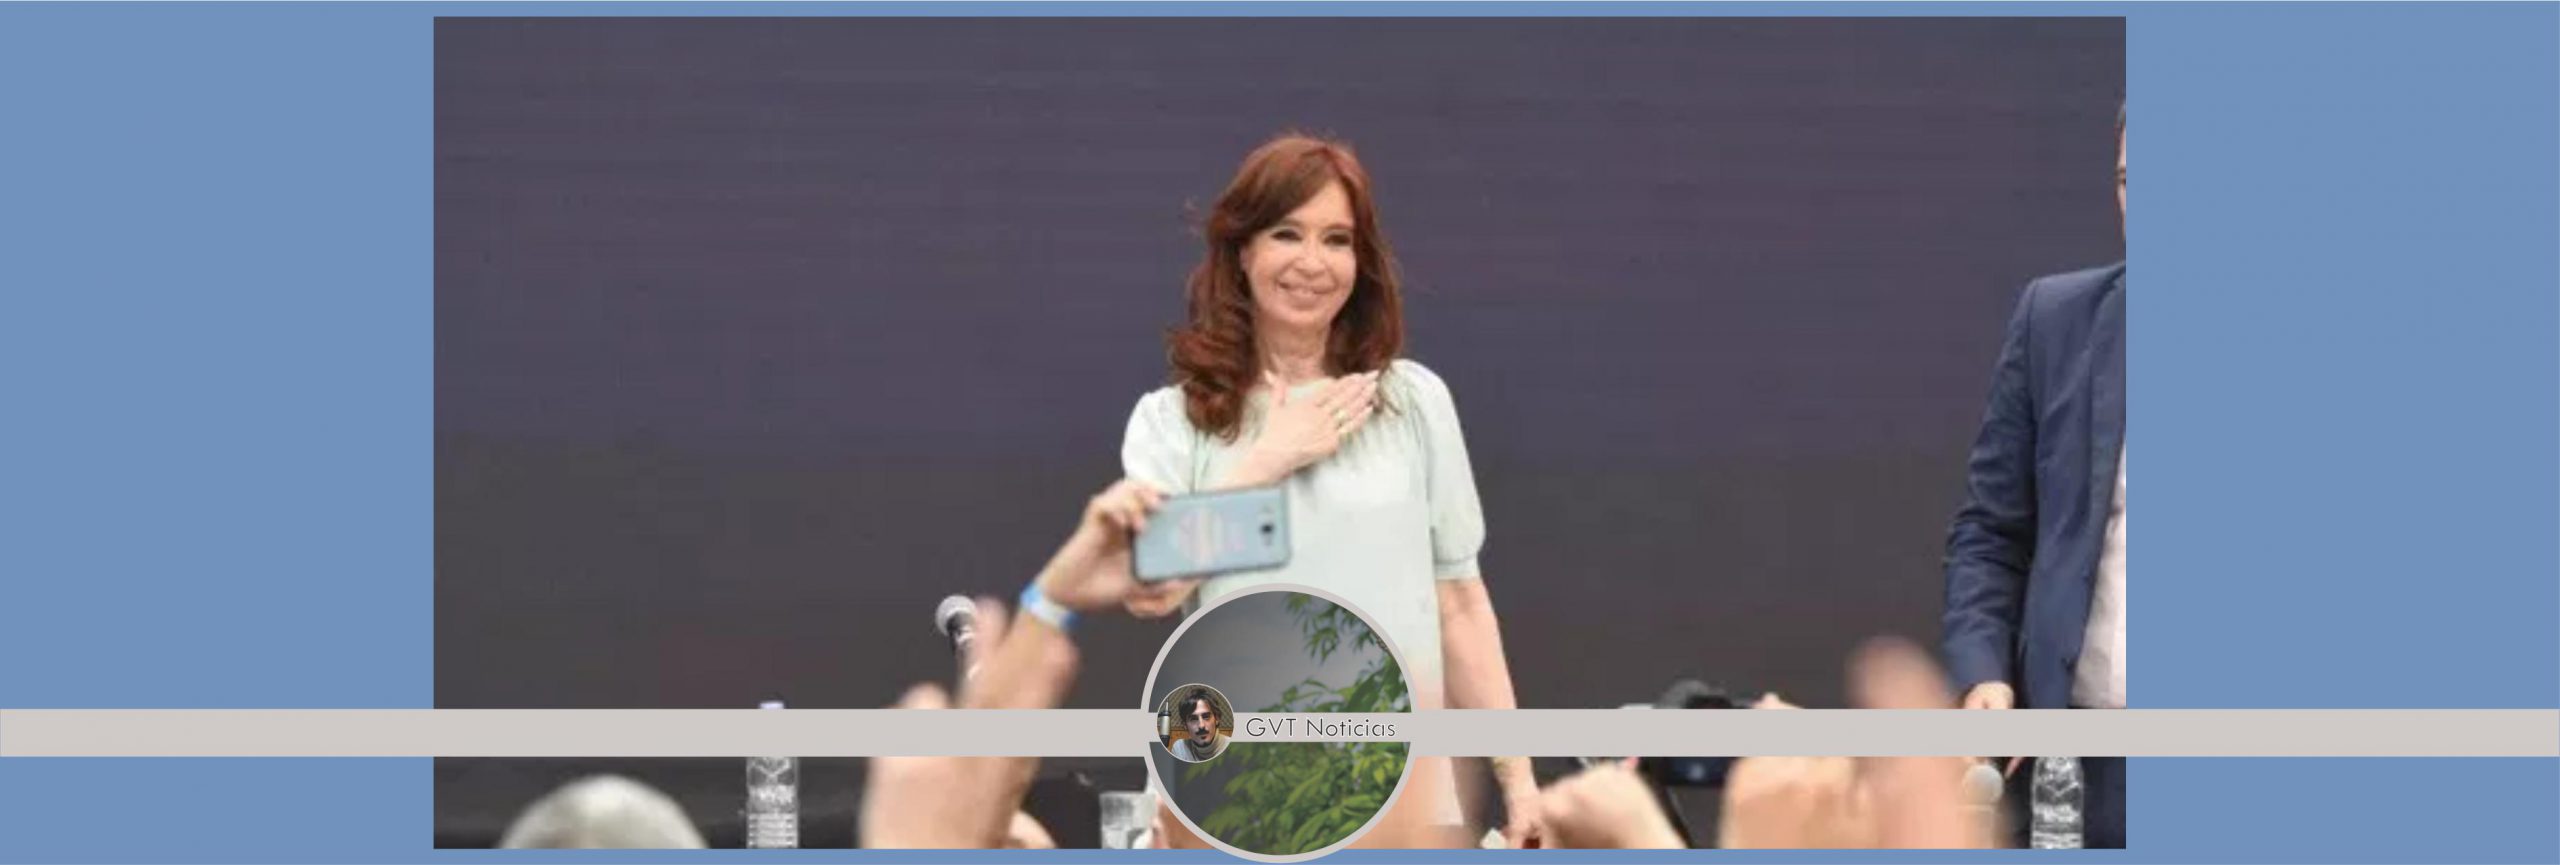 Cristina Fernández de Kirchner, Cristina, CFK,